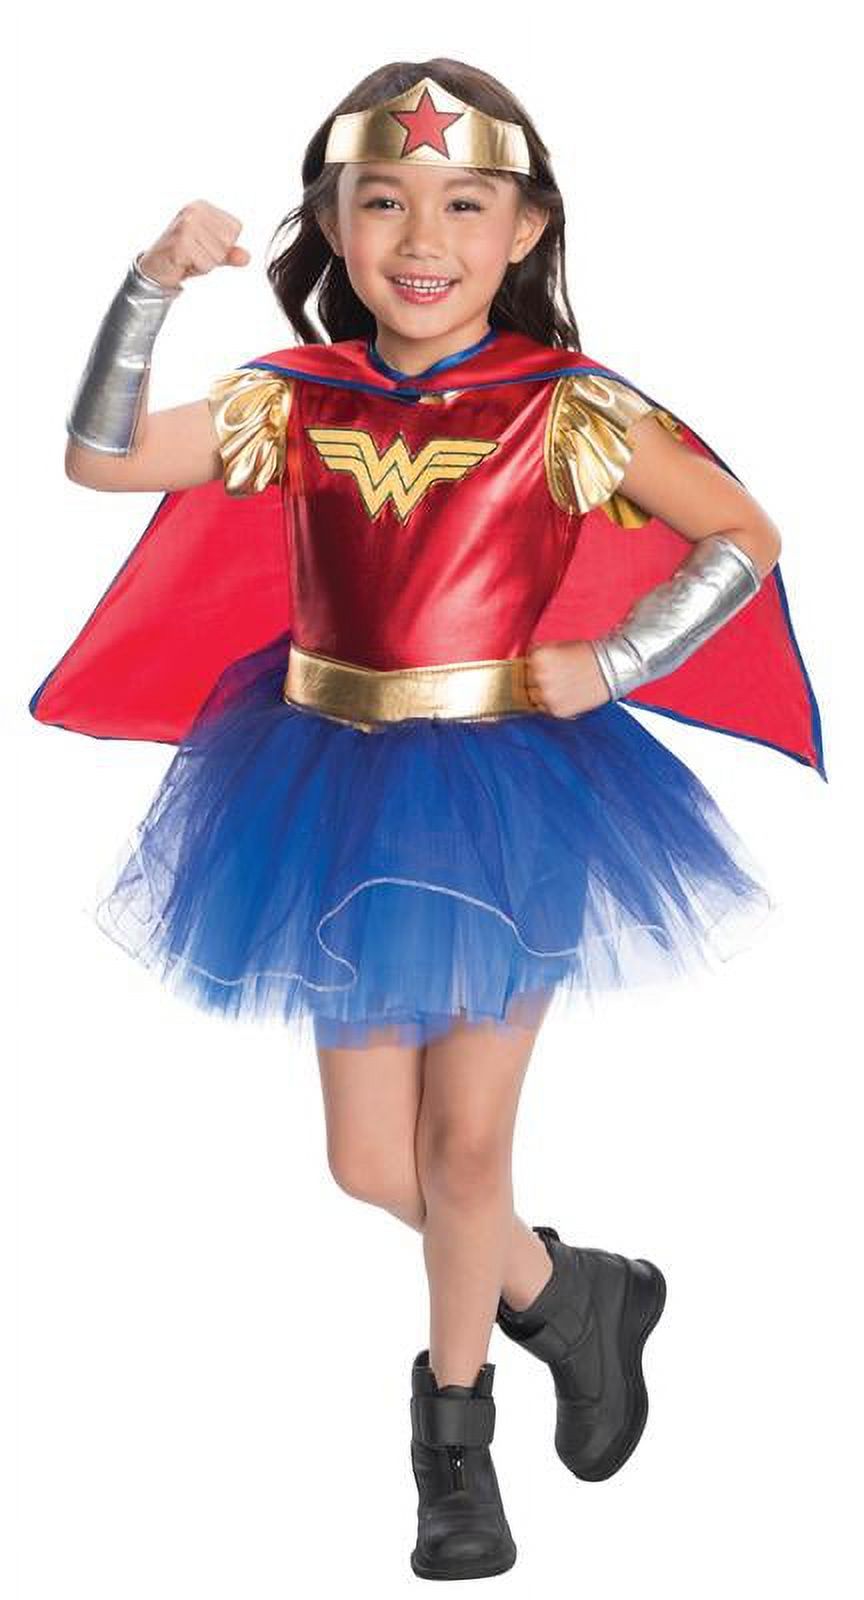 Warner Bros. Wonder Woman Halloween Fancy-Dress Costume for Child, Toddler 3T-4T - image 1 of 2